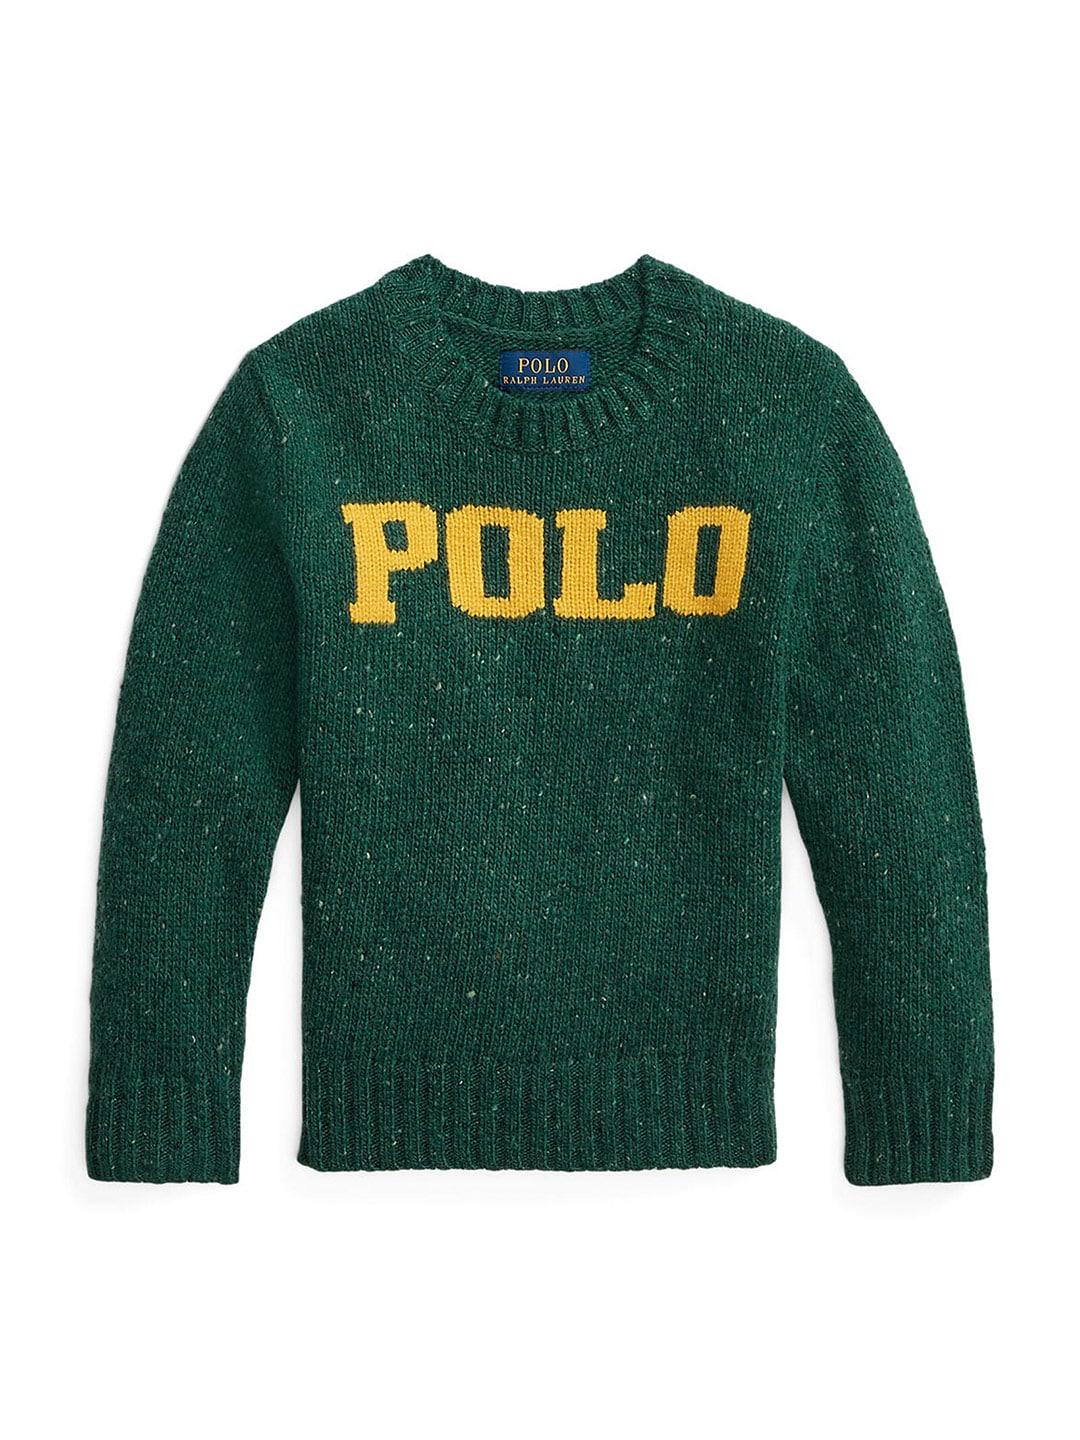 polo ralph lauren boys brand logo printed sweater